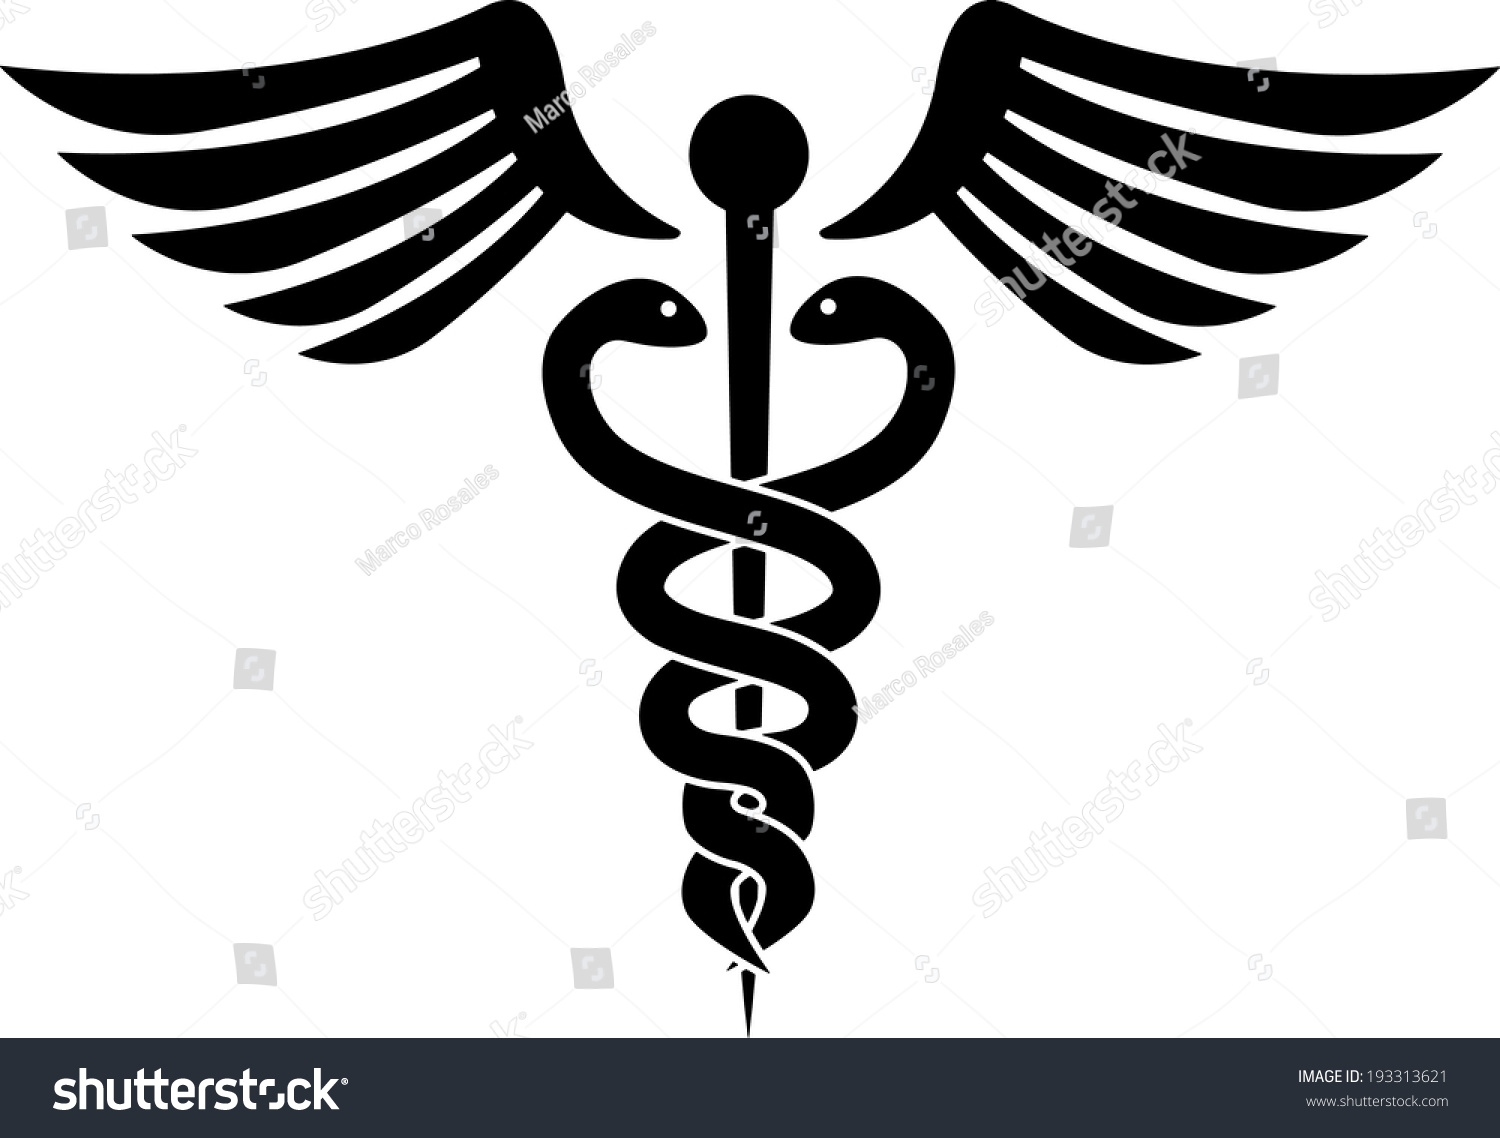 stock-vector-medical-hospital-health-snake-symbol-193313621.jpg